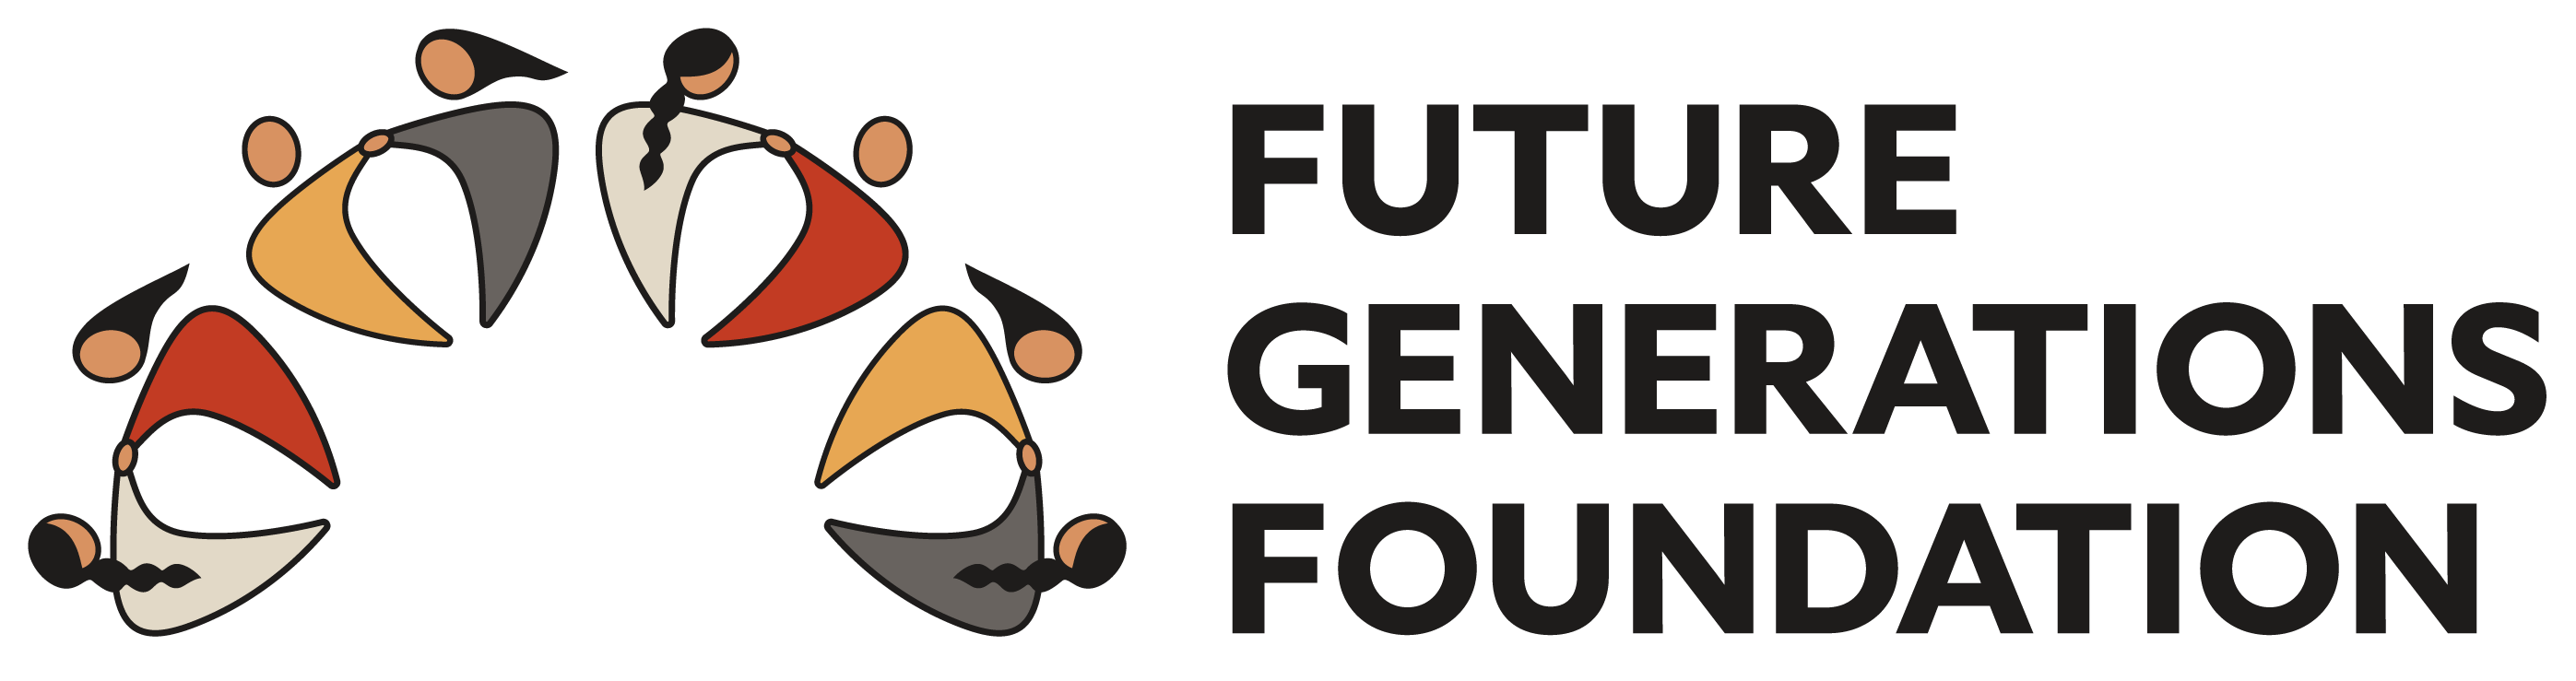 Future Generations Foundation